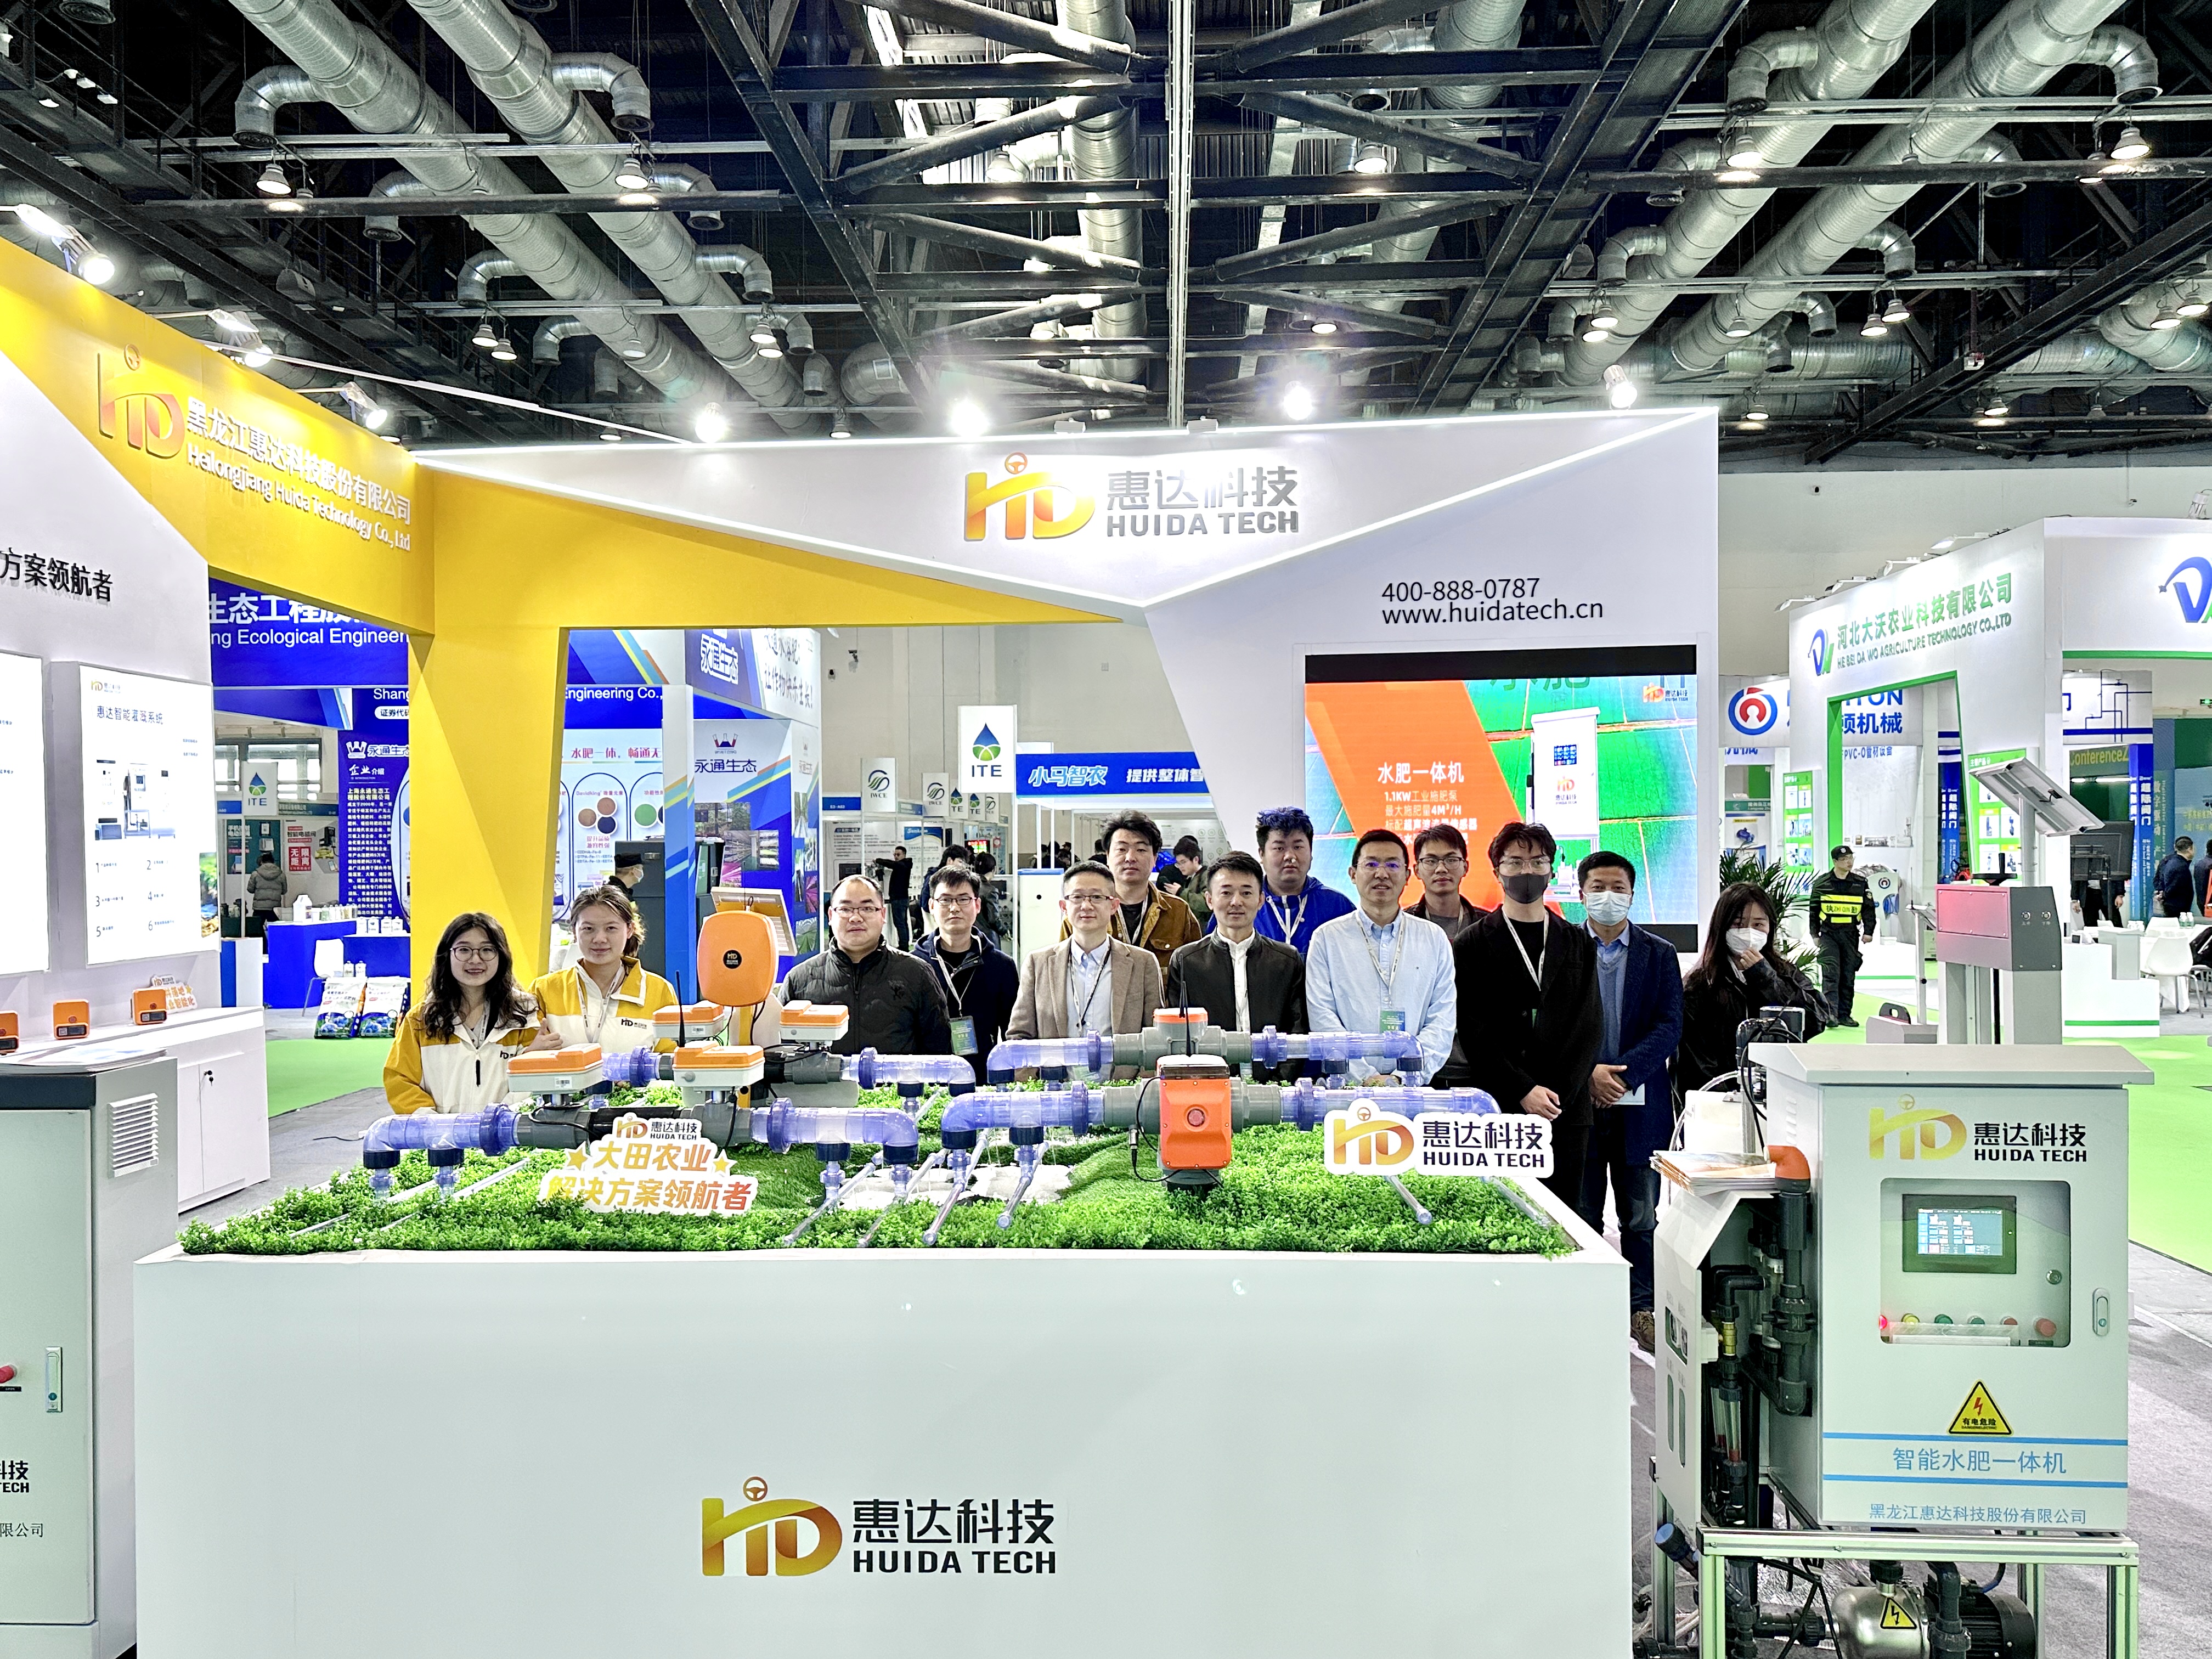 The 10th Beijing International Irrigation Technology Expo -- HUIDA TECH